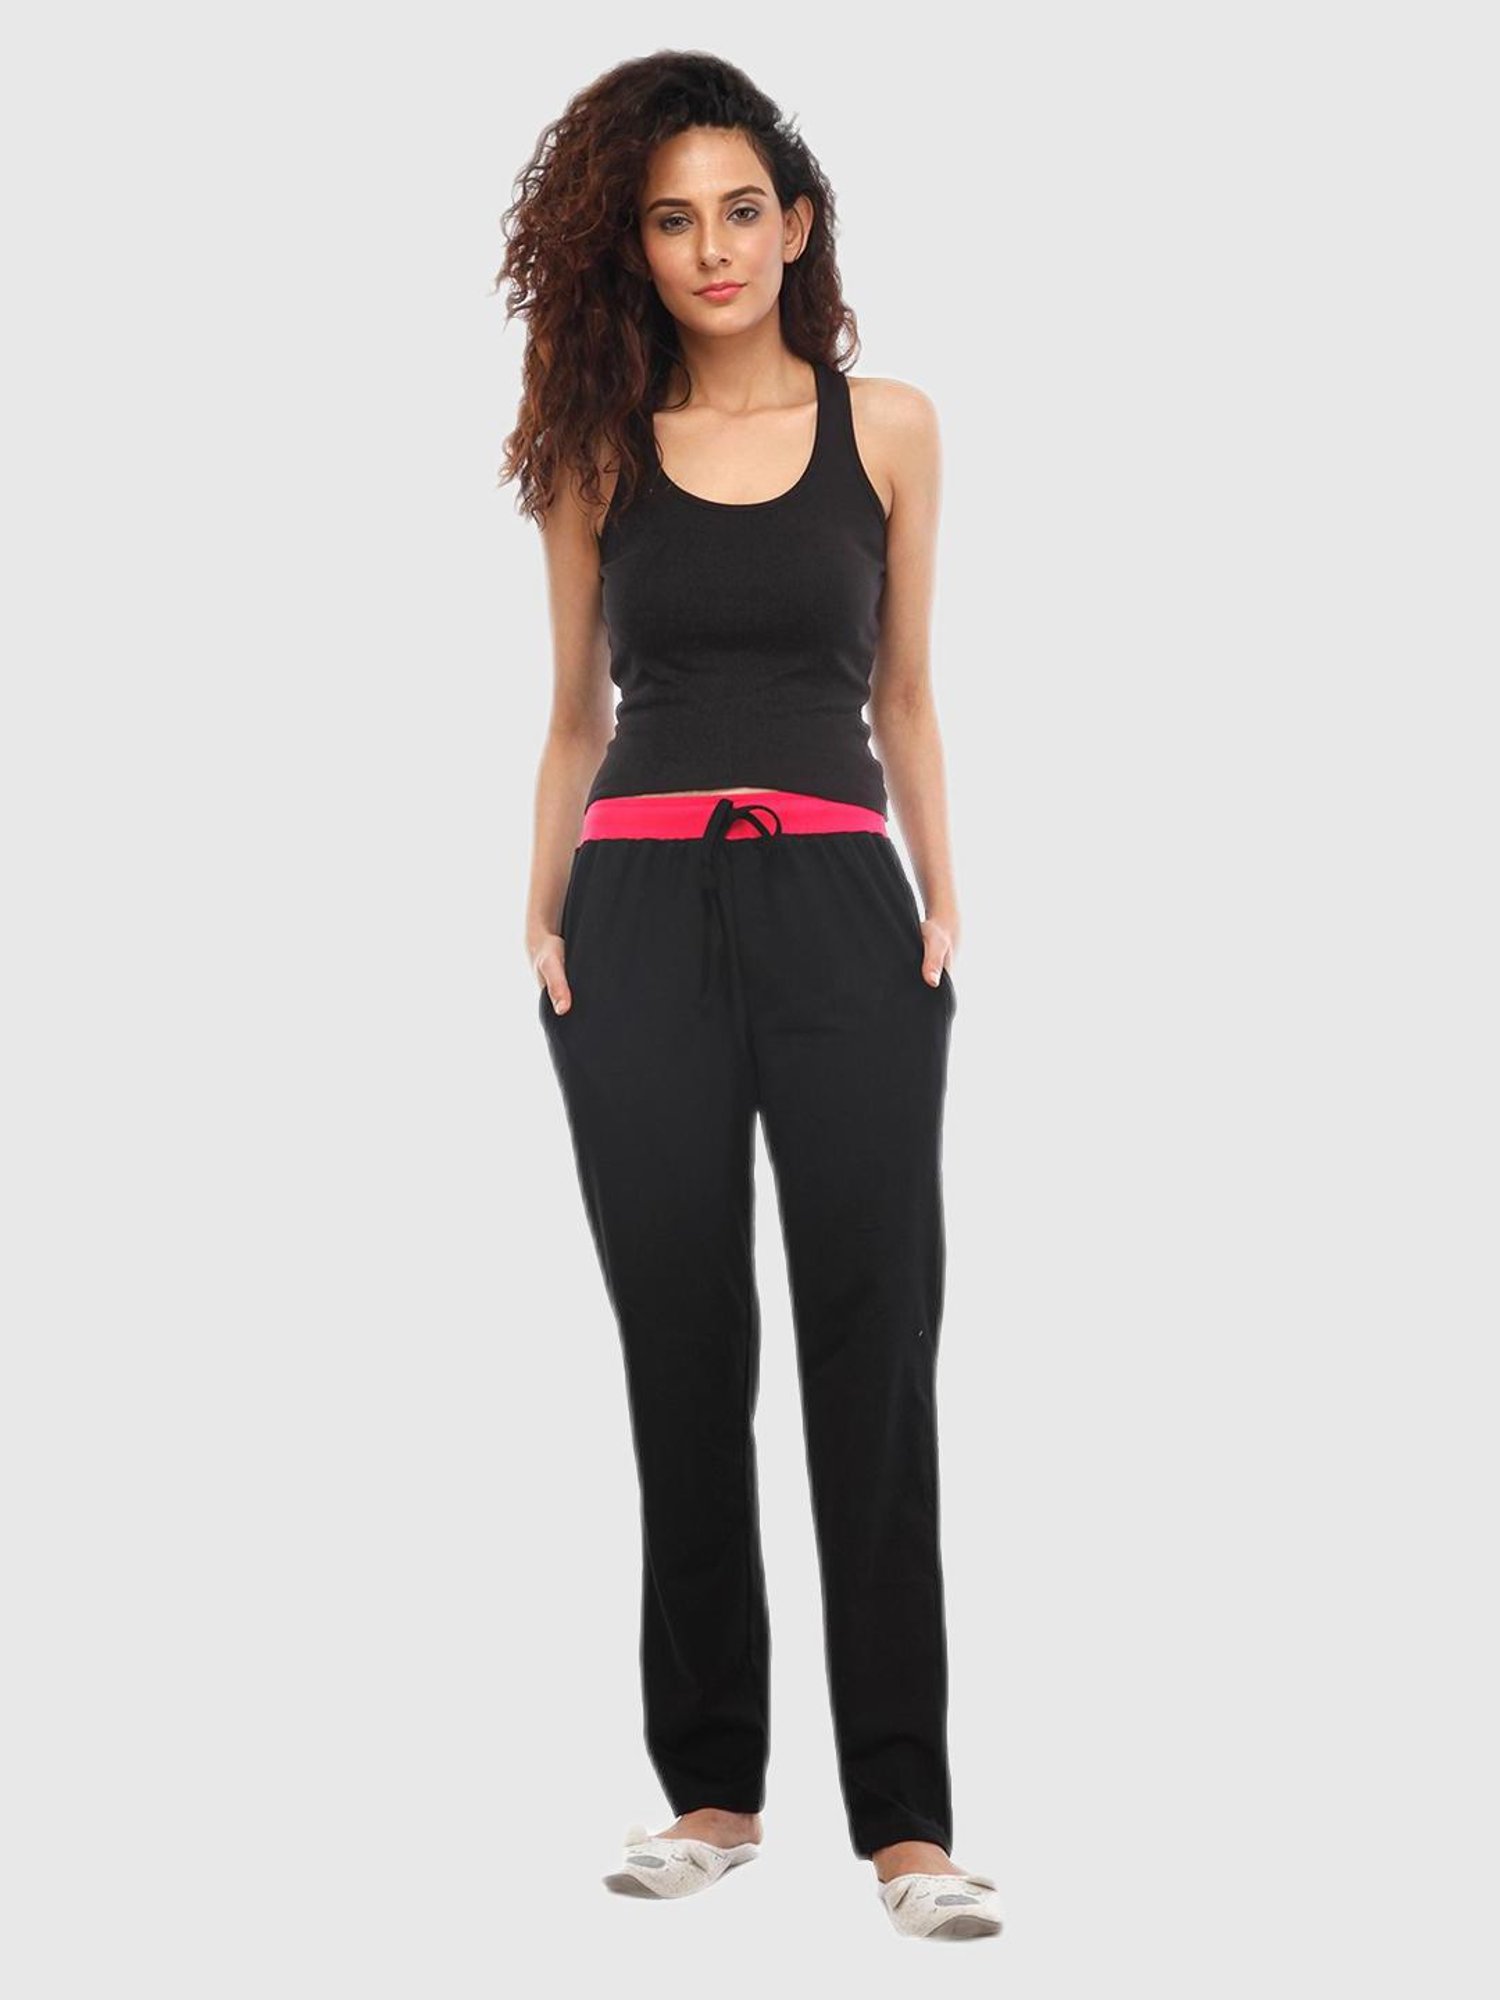 Buy Nite Flite Black Cotton Yoga Pants for Women's Online @ Tata CLiQ